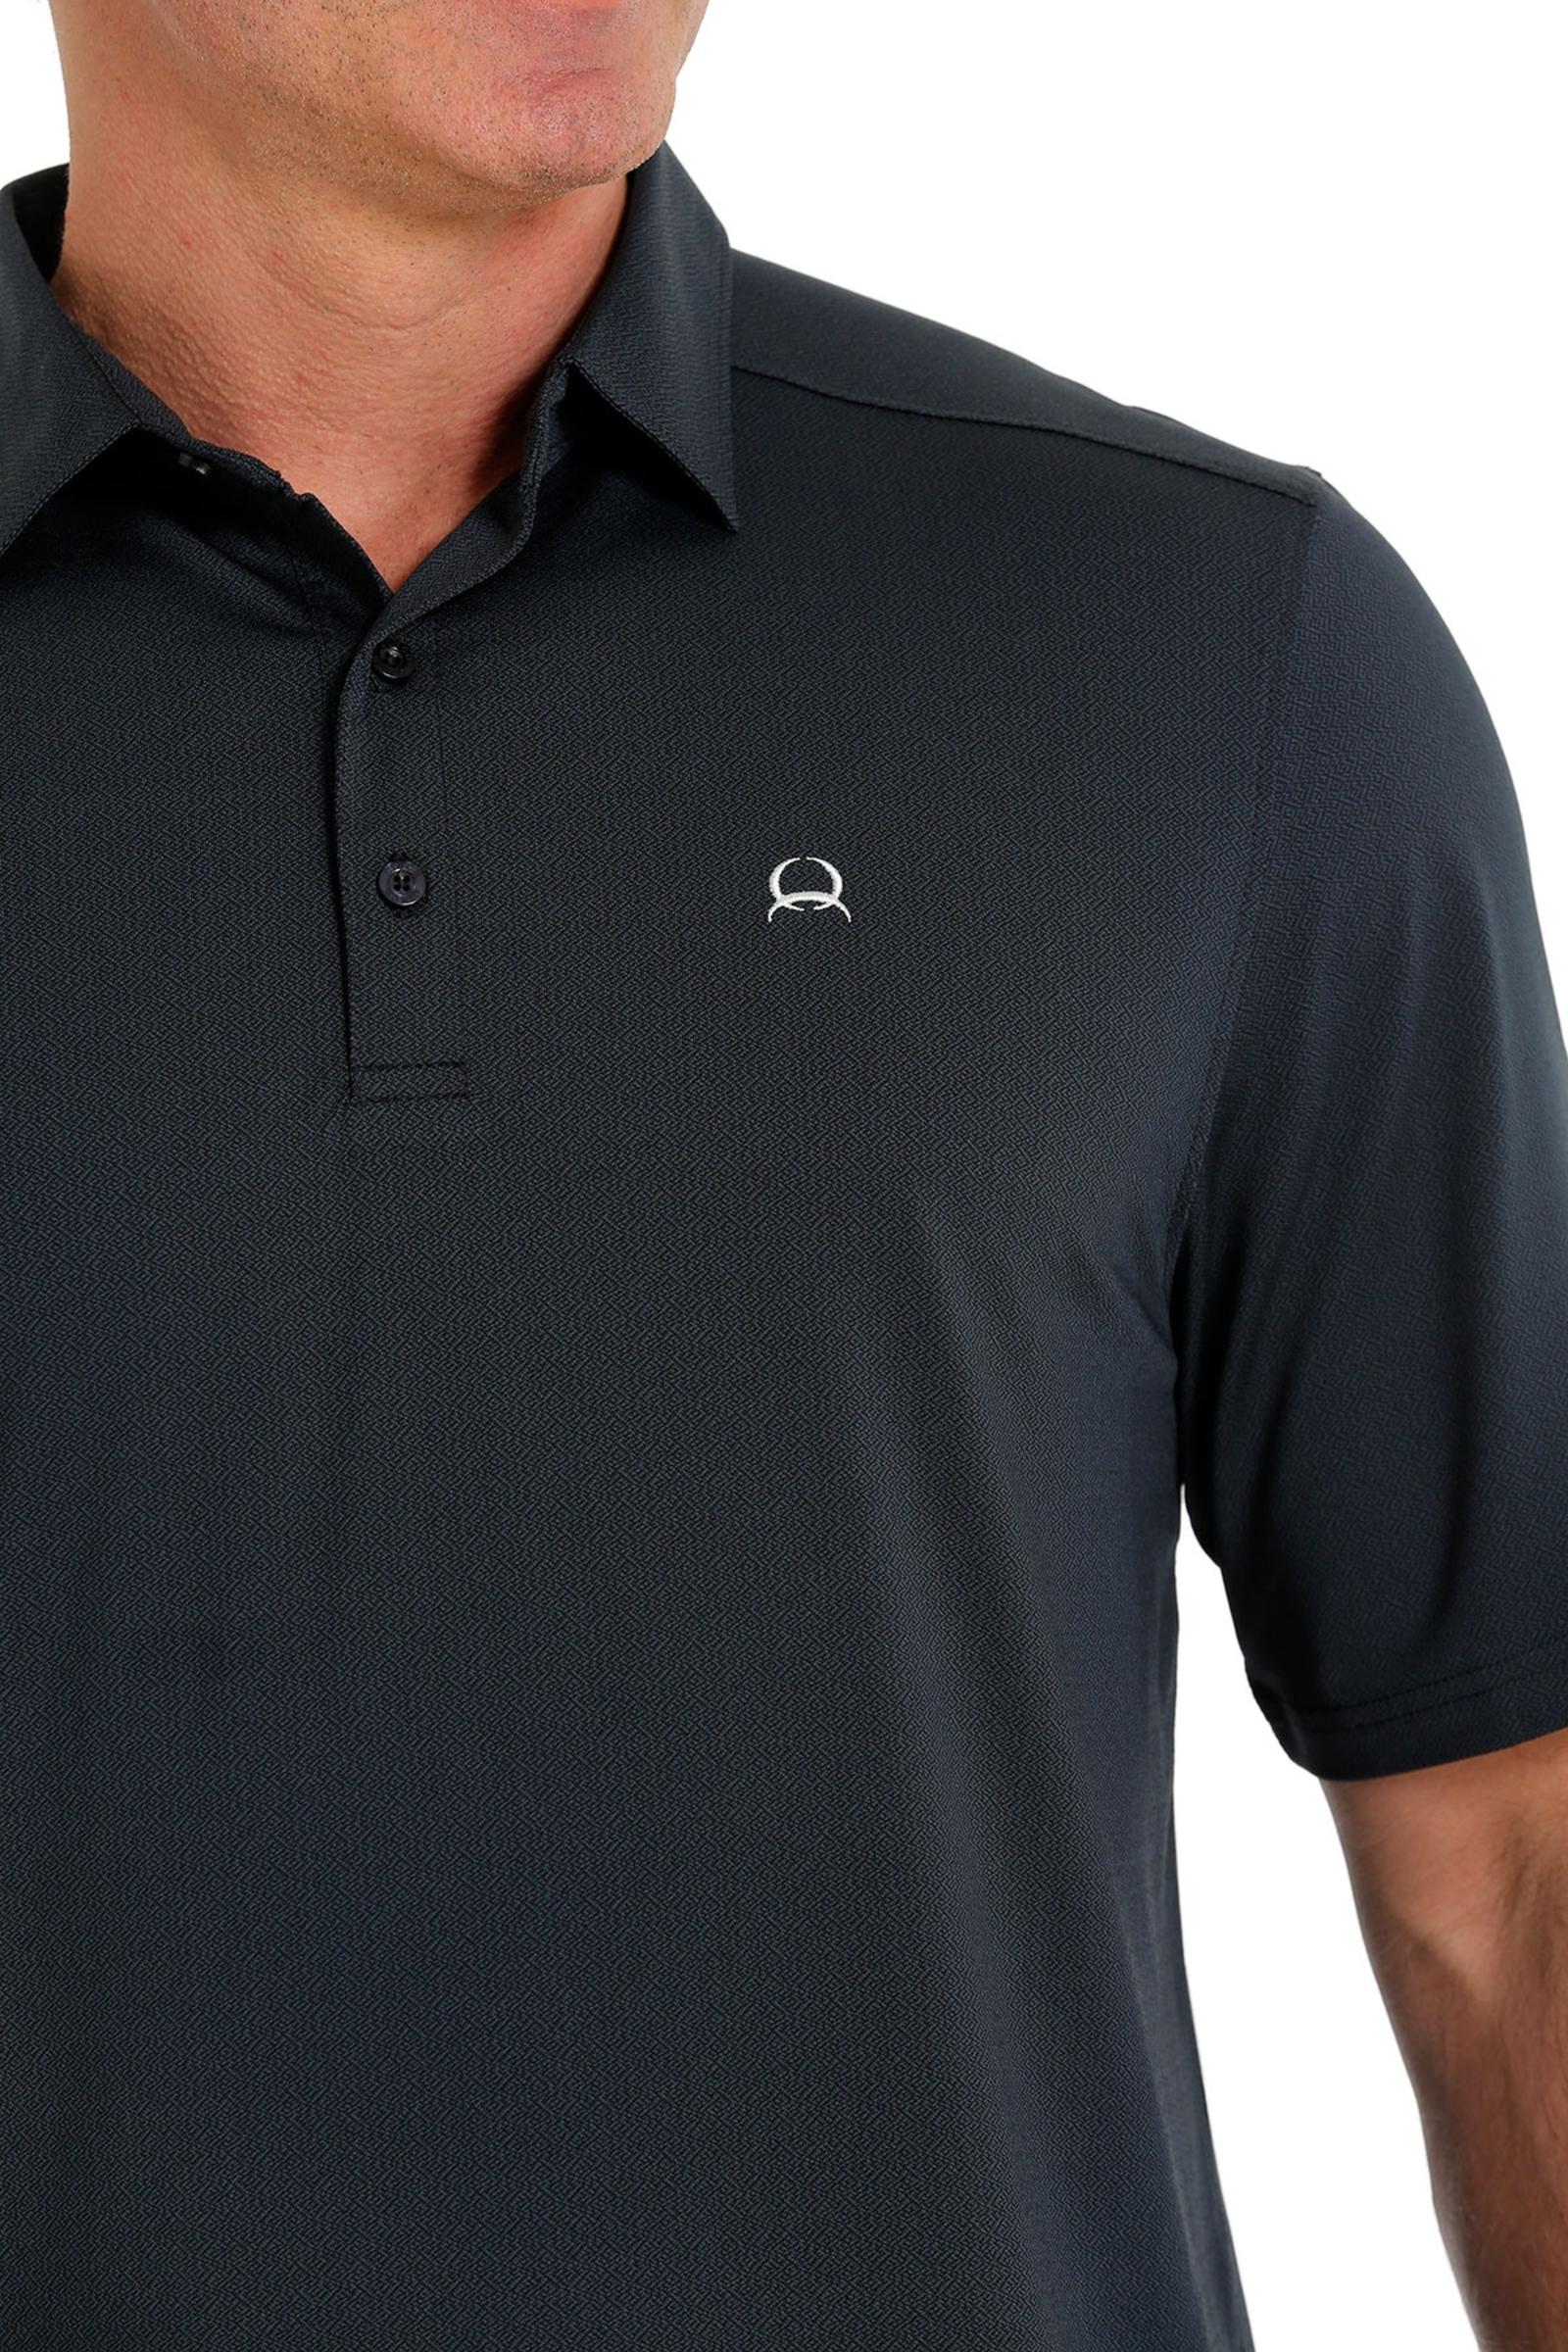 Cinch Men's Short Sleeve Arenaflex Polo Shirt